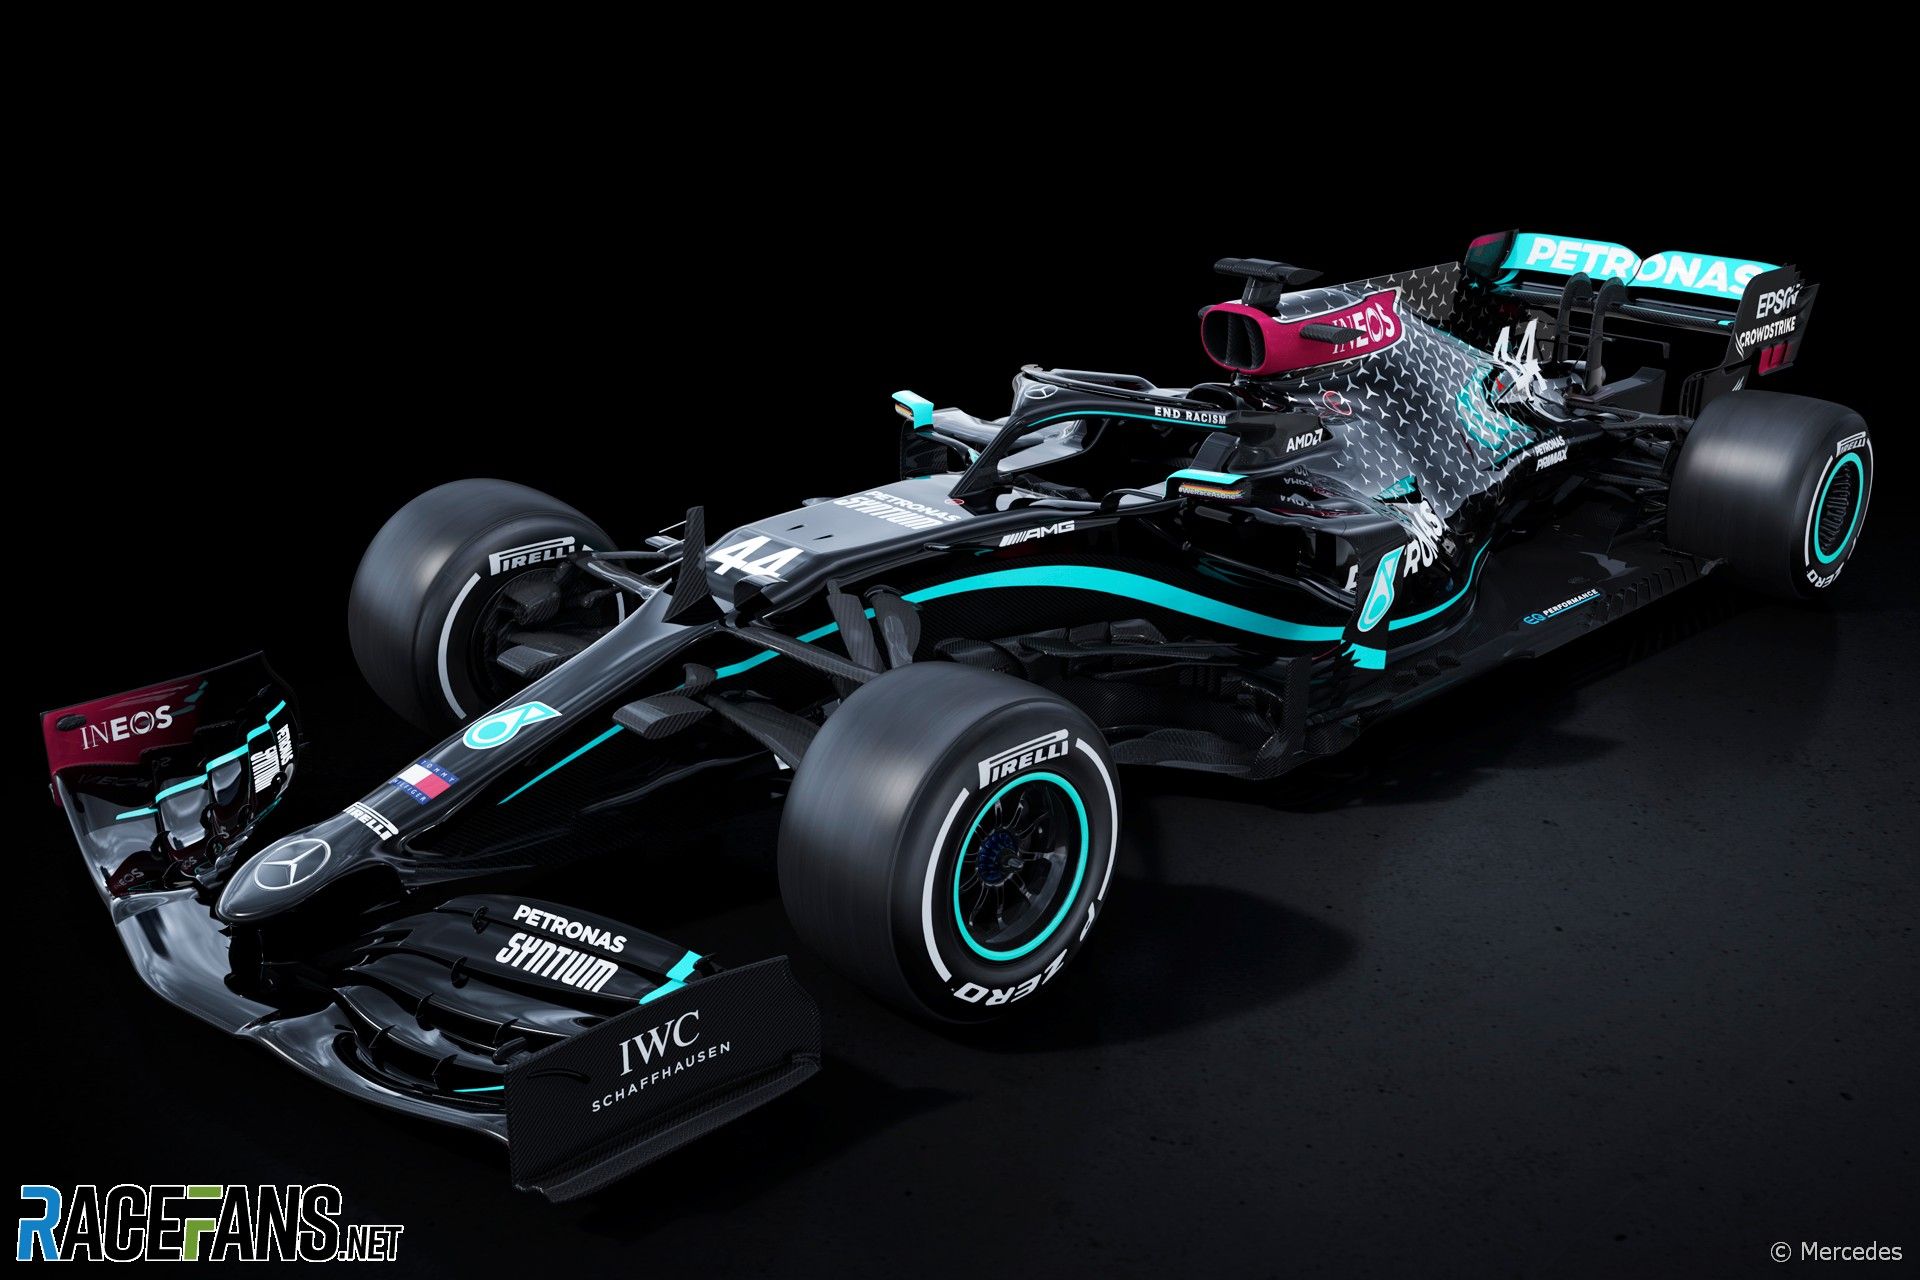 Mercedes reveals new black end racism livery for F1 car · RaceFans